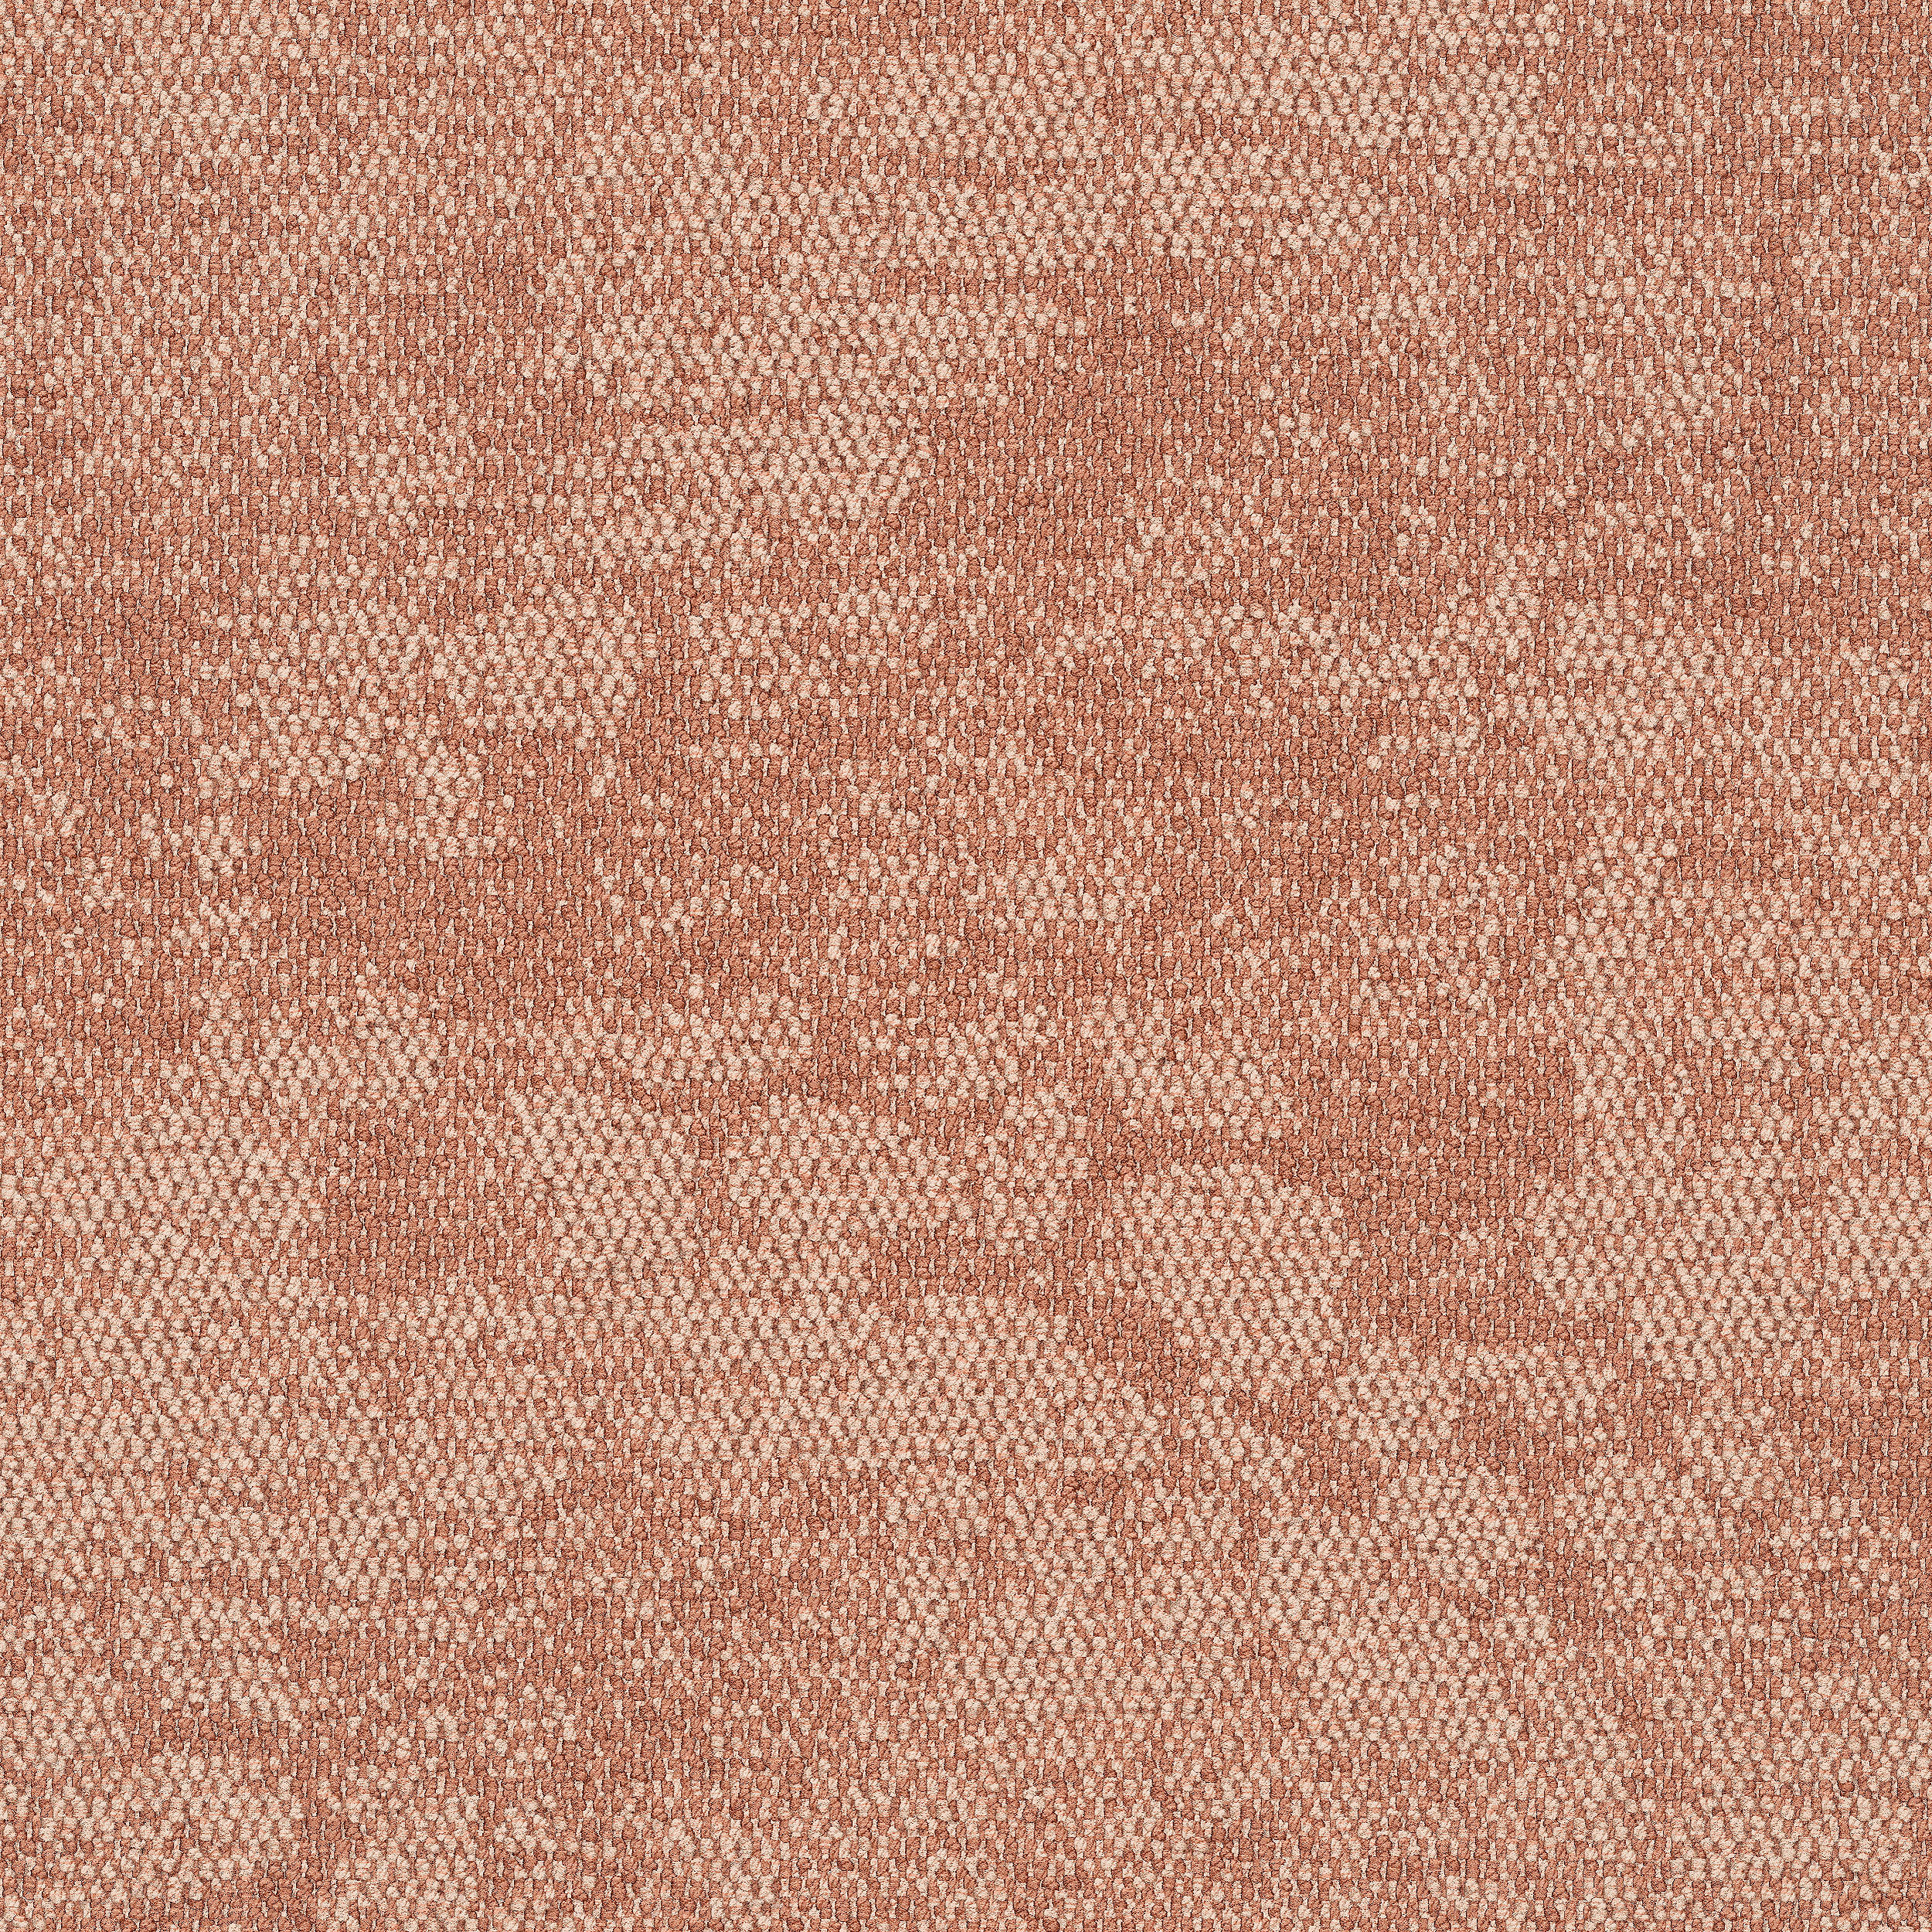 Escarpment carpet tile in Desert Sands image number 11